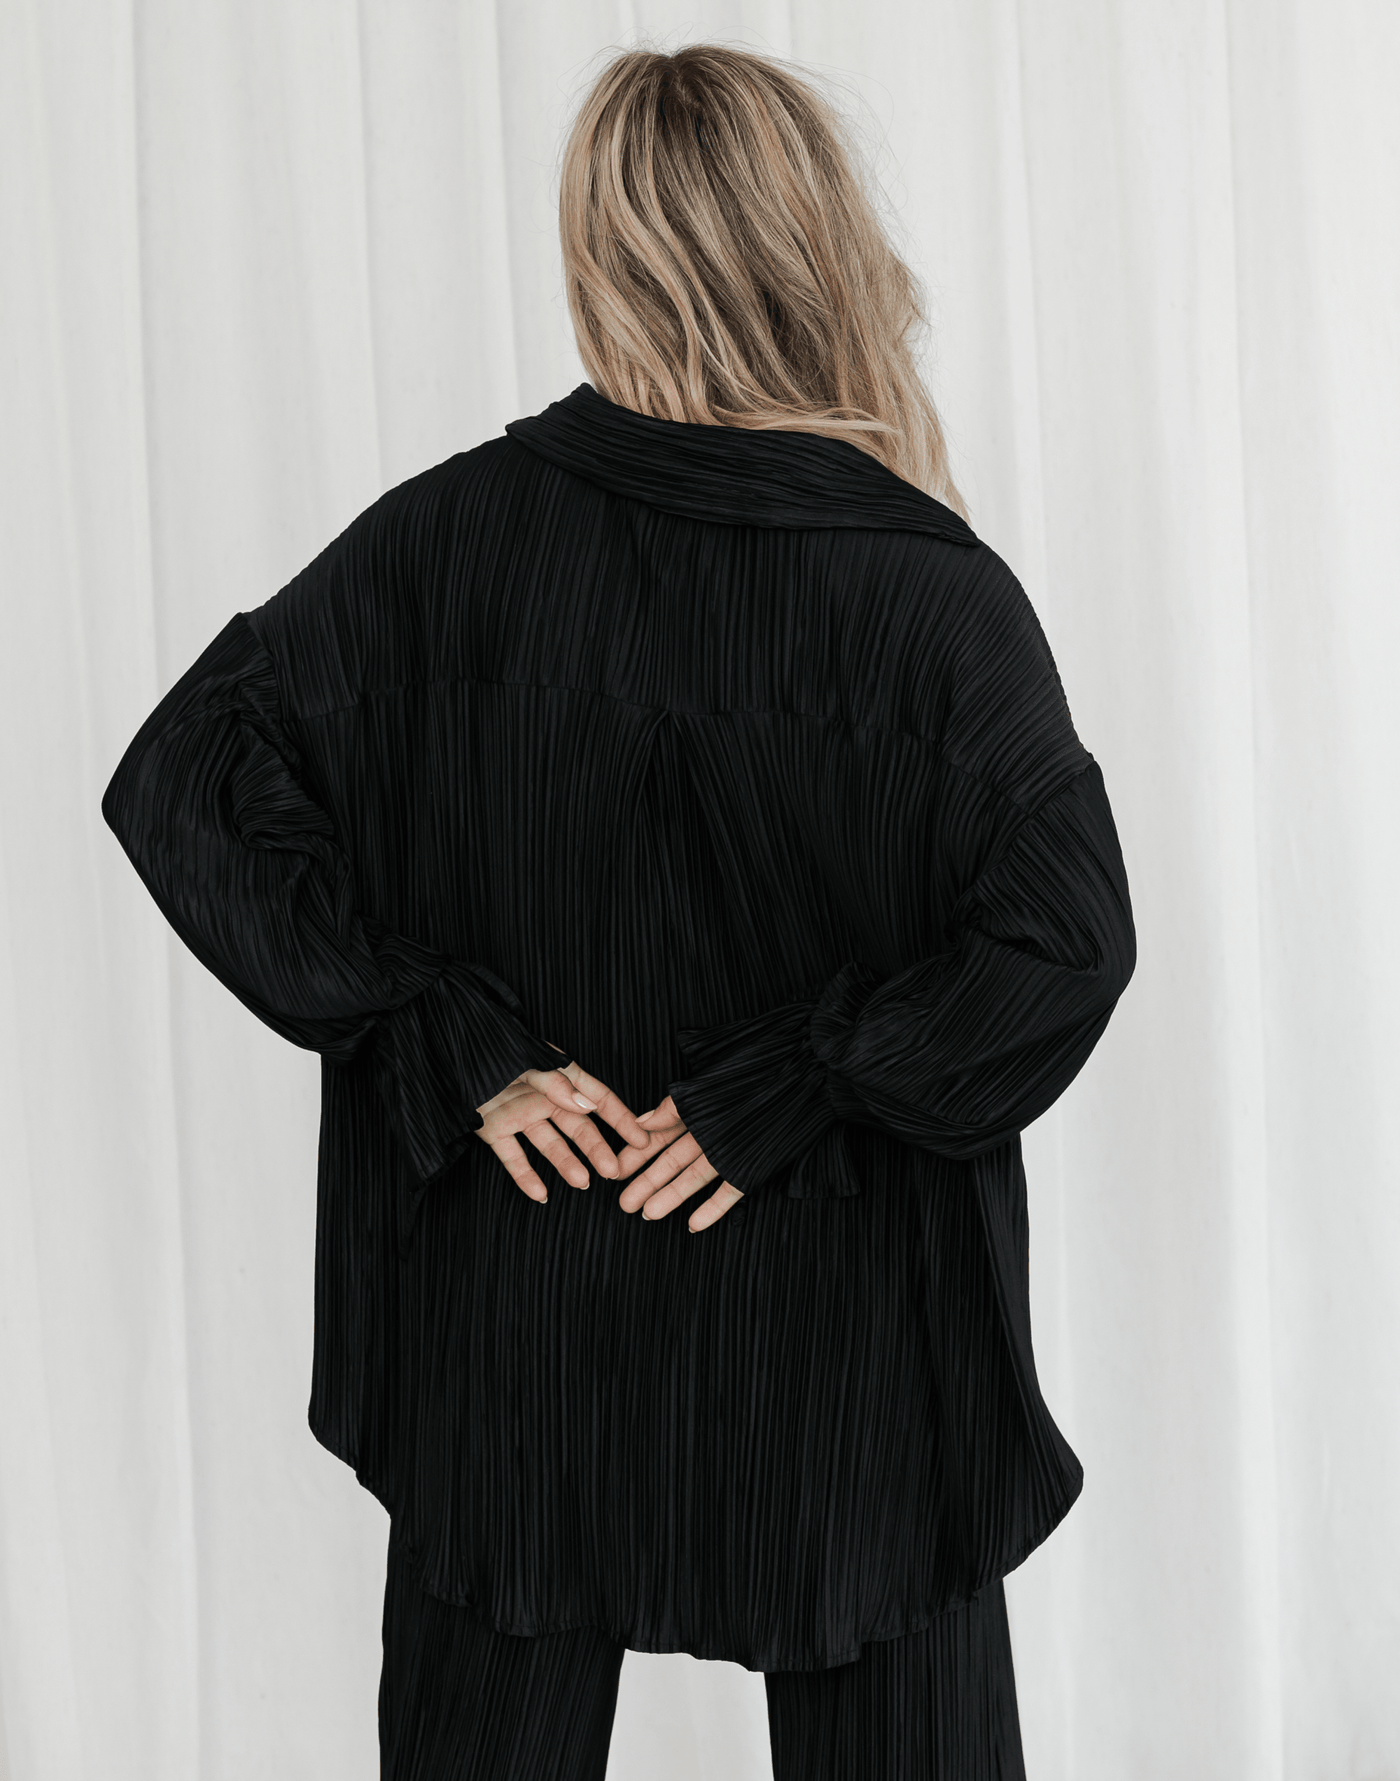 Sweet Serenity Shirt (Black) - Black Pleated Shirt - Women's Top - Charcoal Clothing